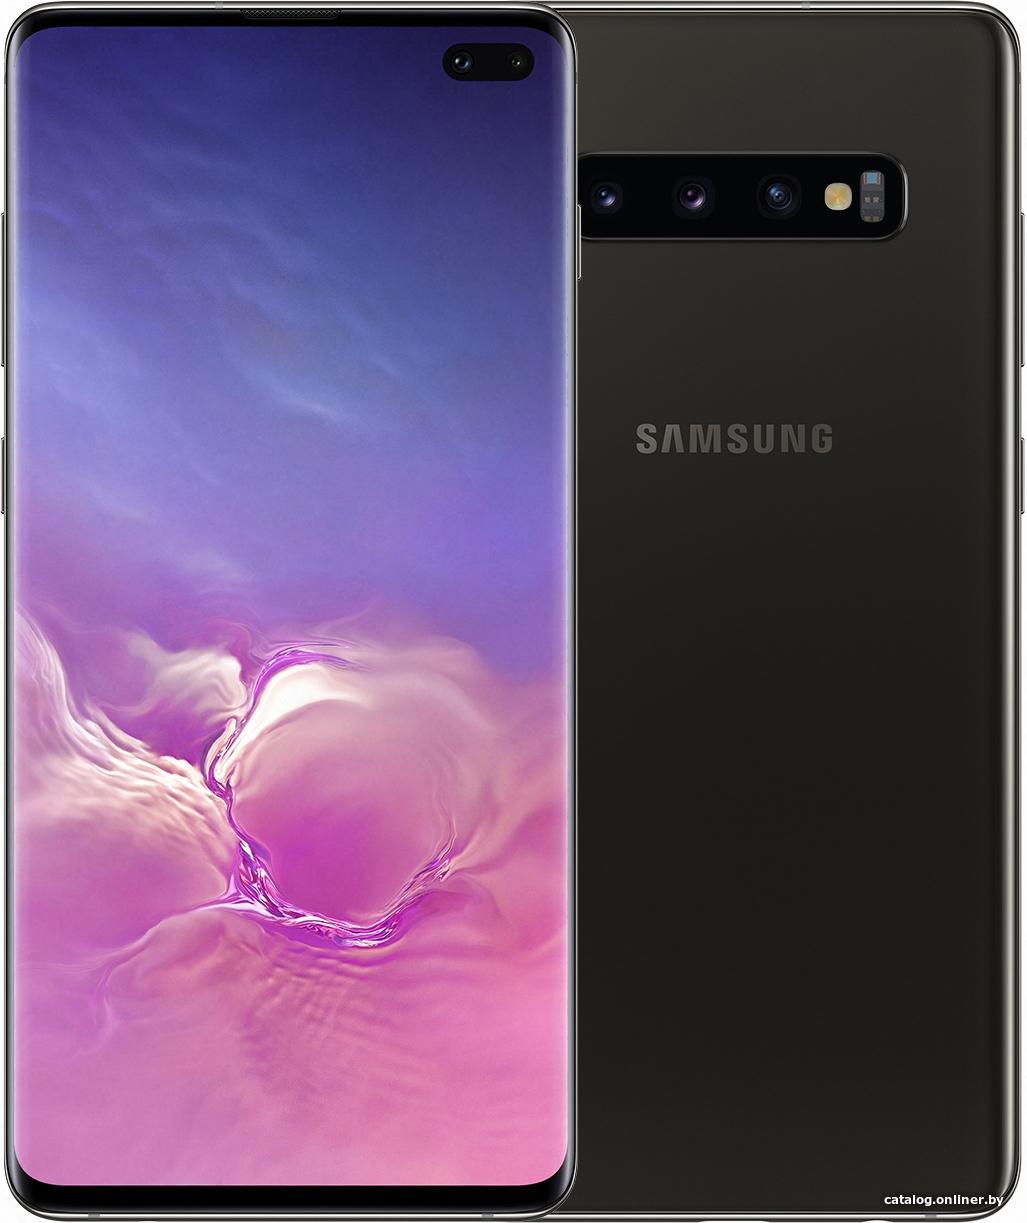 Самсунг новая 10. Samsung Galaxy s10. Samsung Galaxy s10+. Samsung Galaxy s10 / s10 +. Samsung Galaxy s 10 плюс.